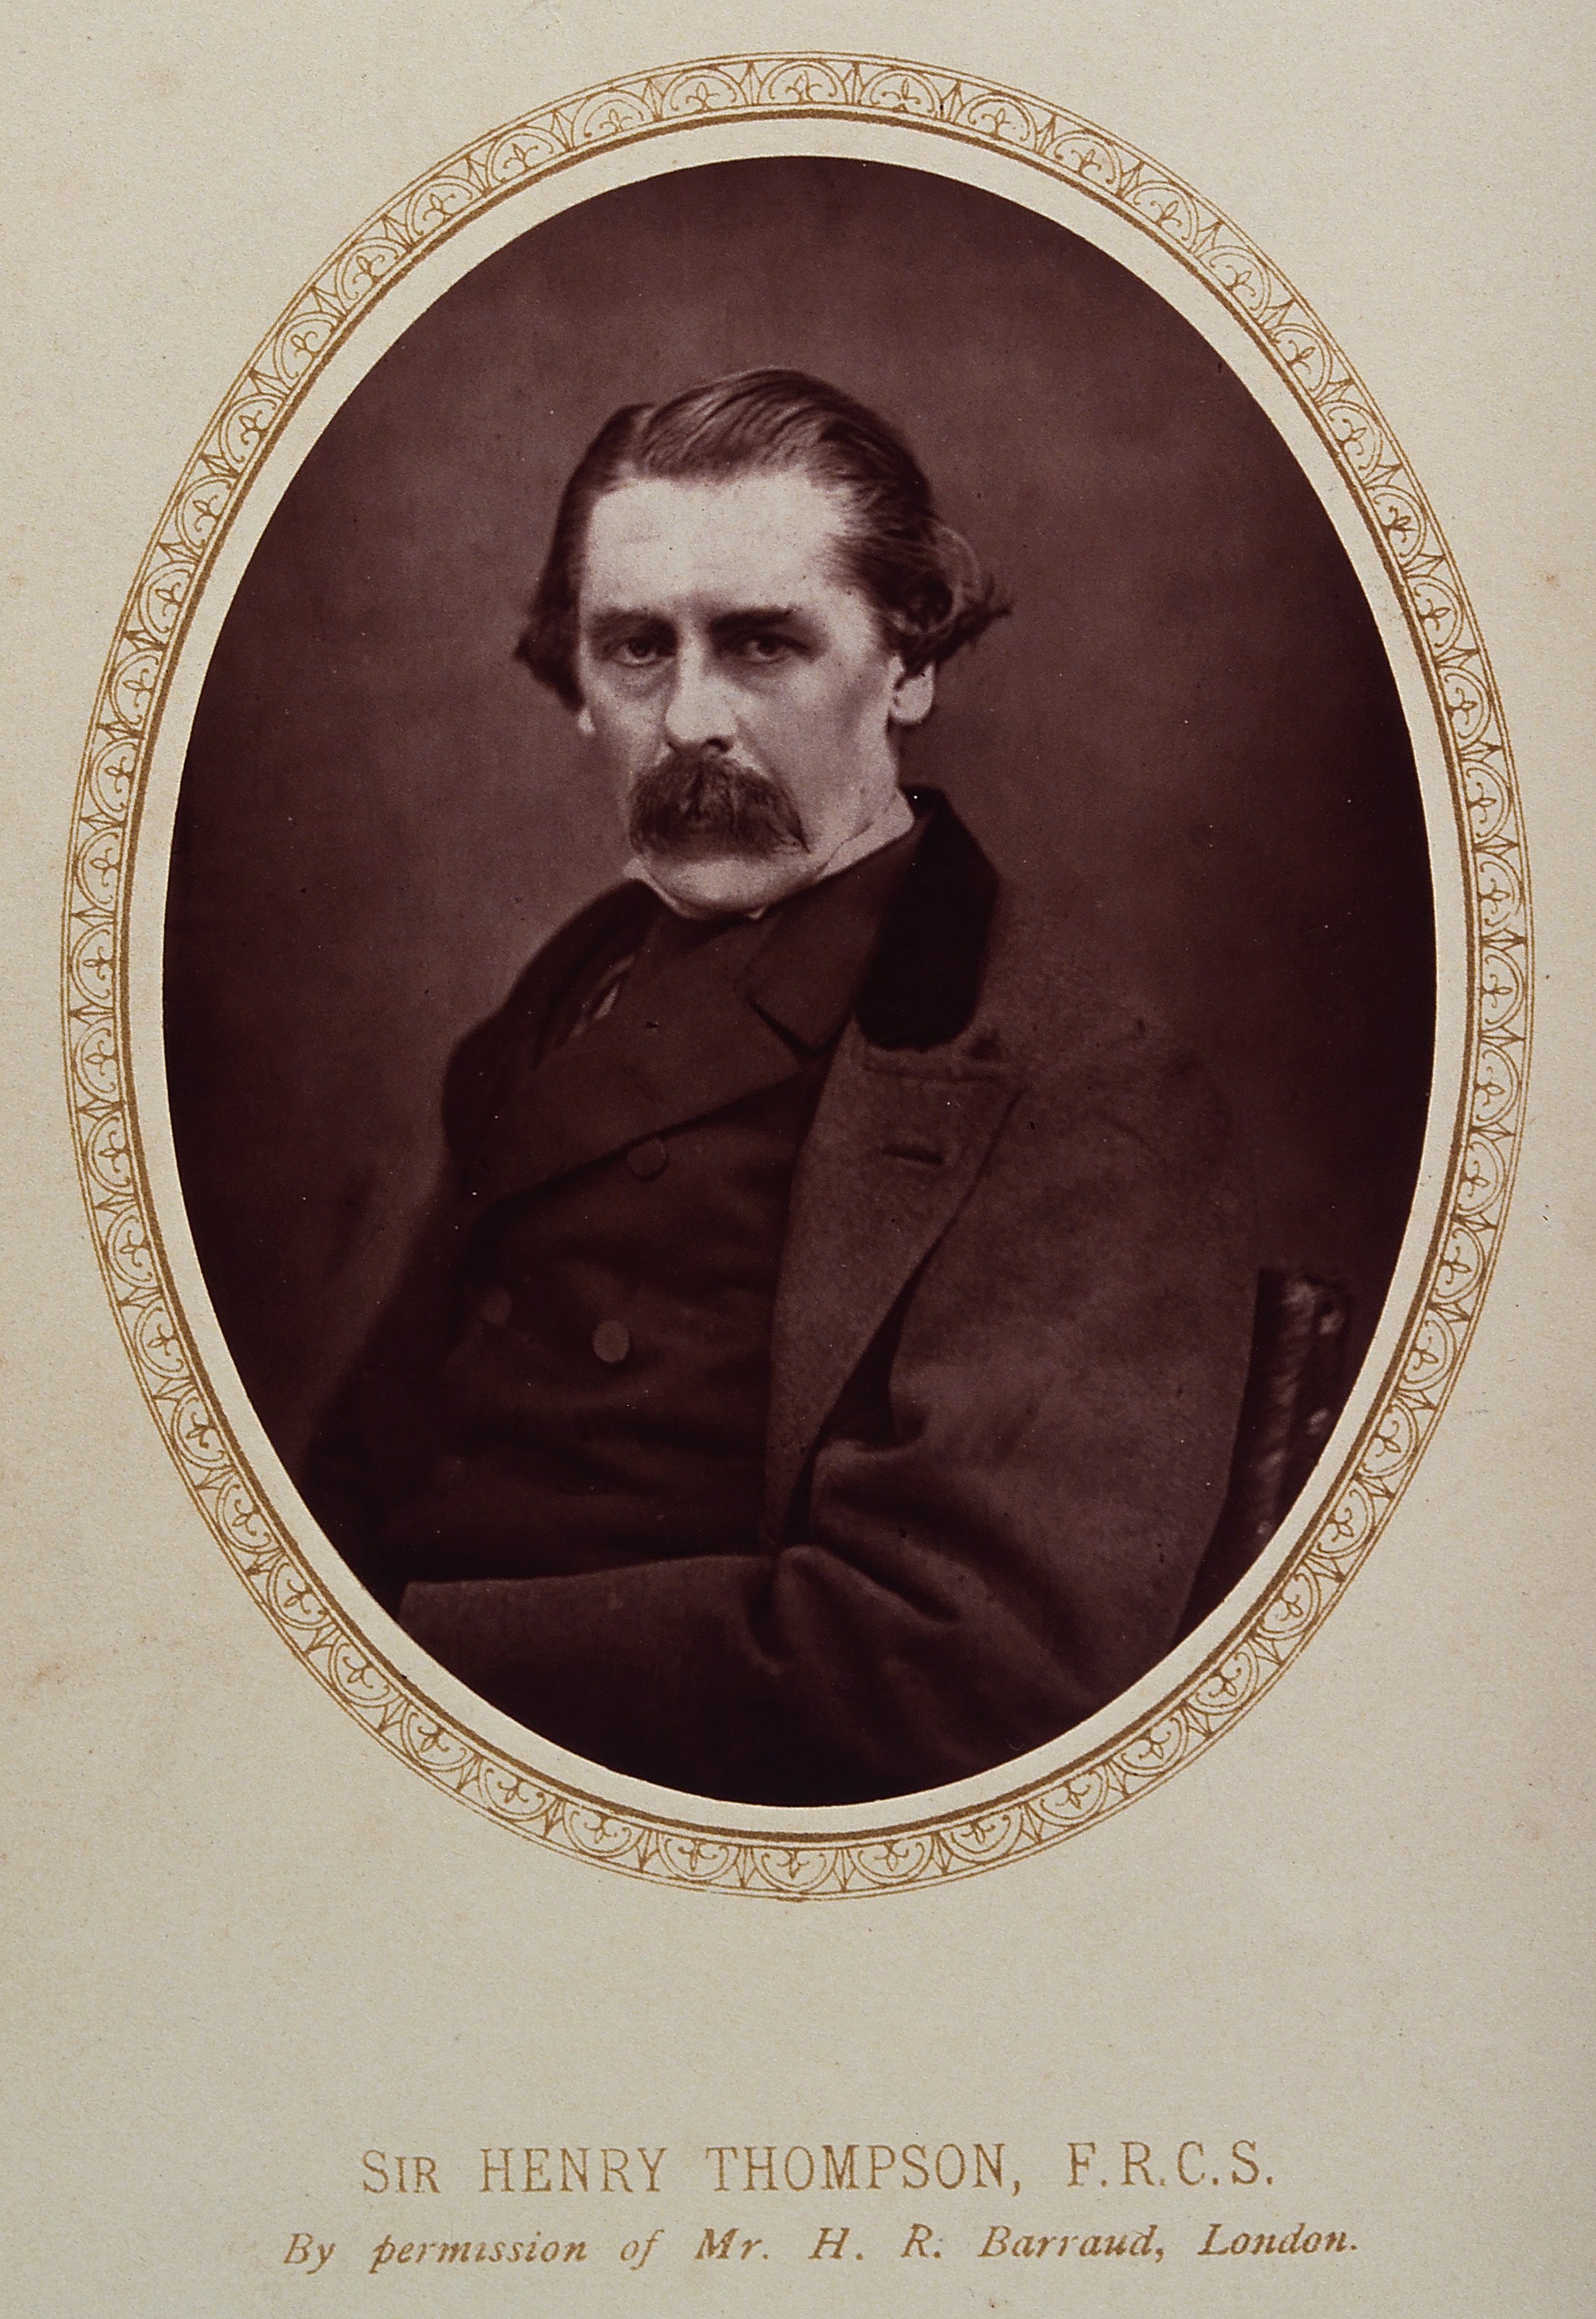 Sir Henry Thompson. Photograph after H.R. Barraud. Wellcome V0027254